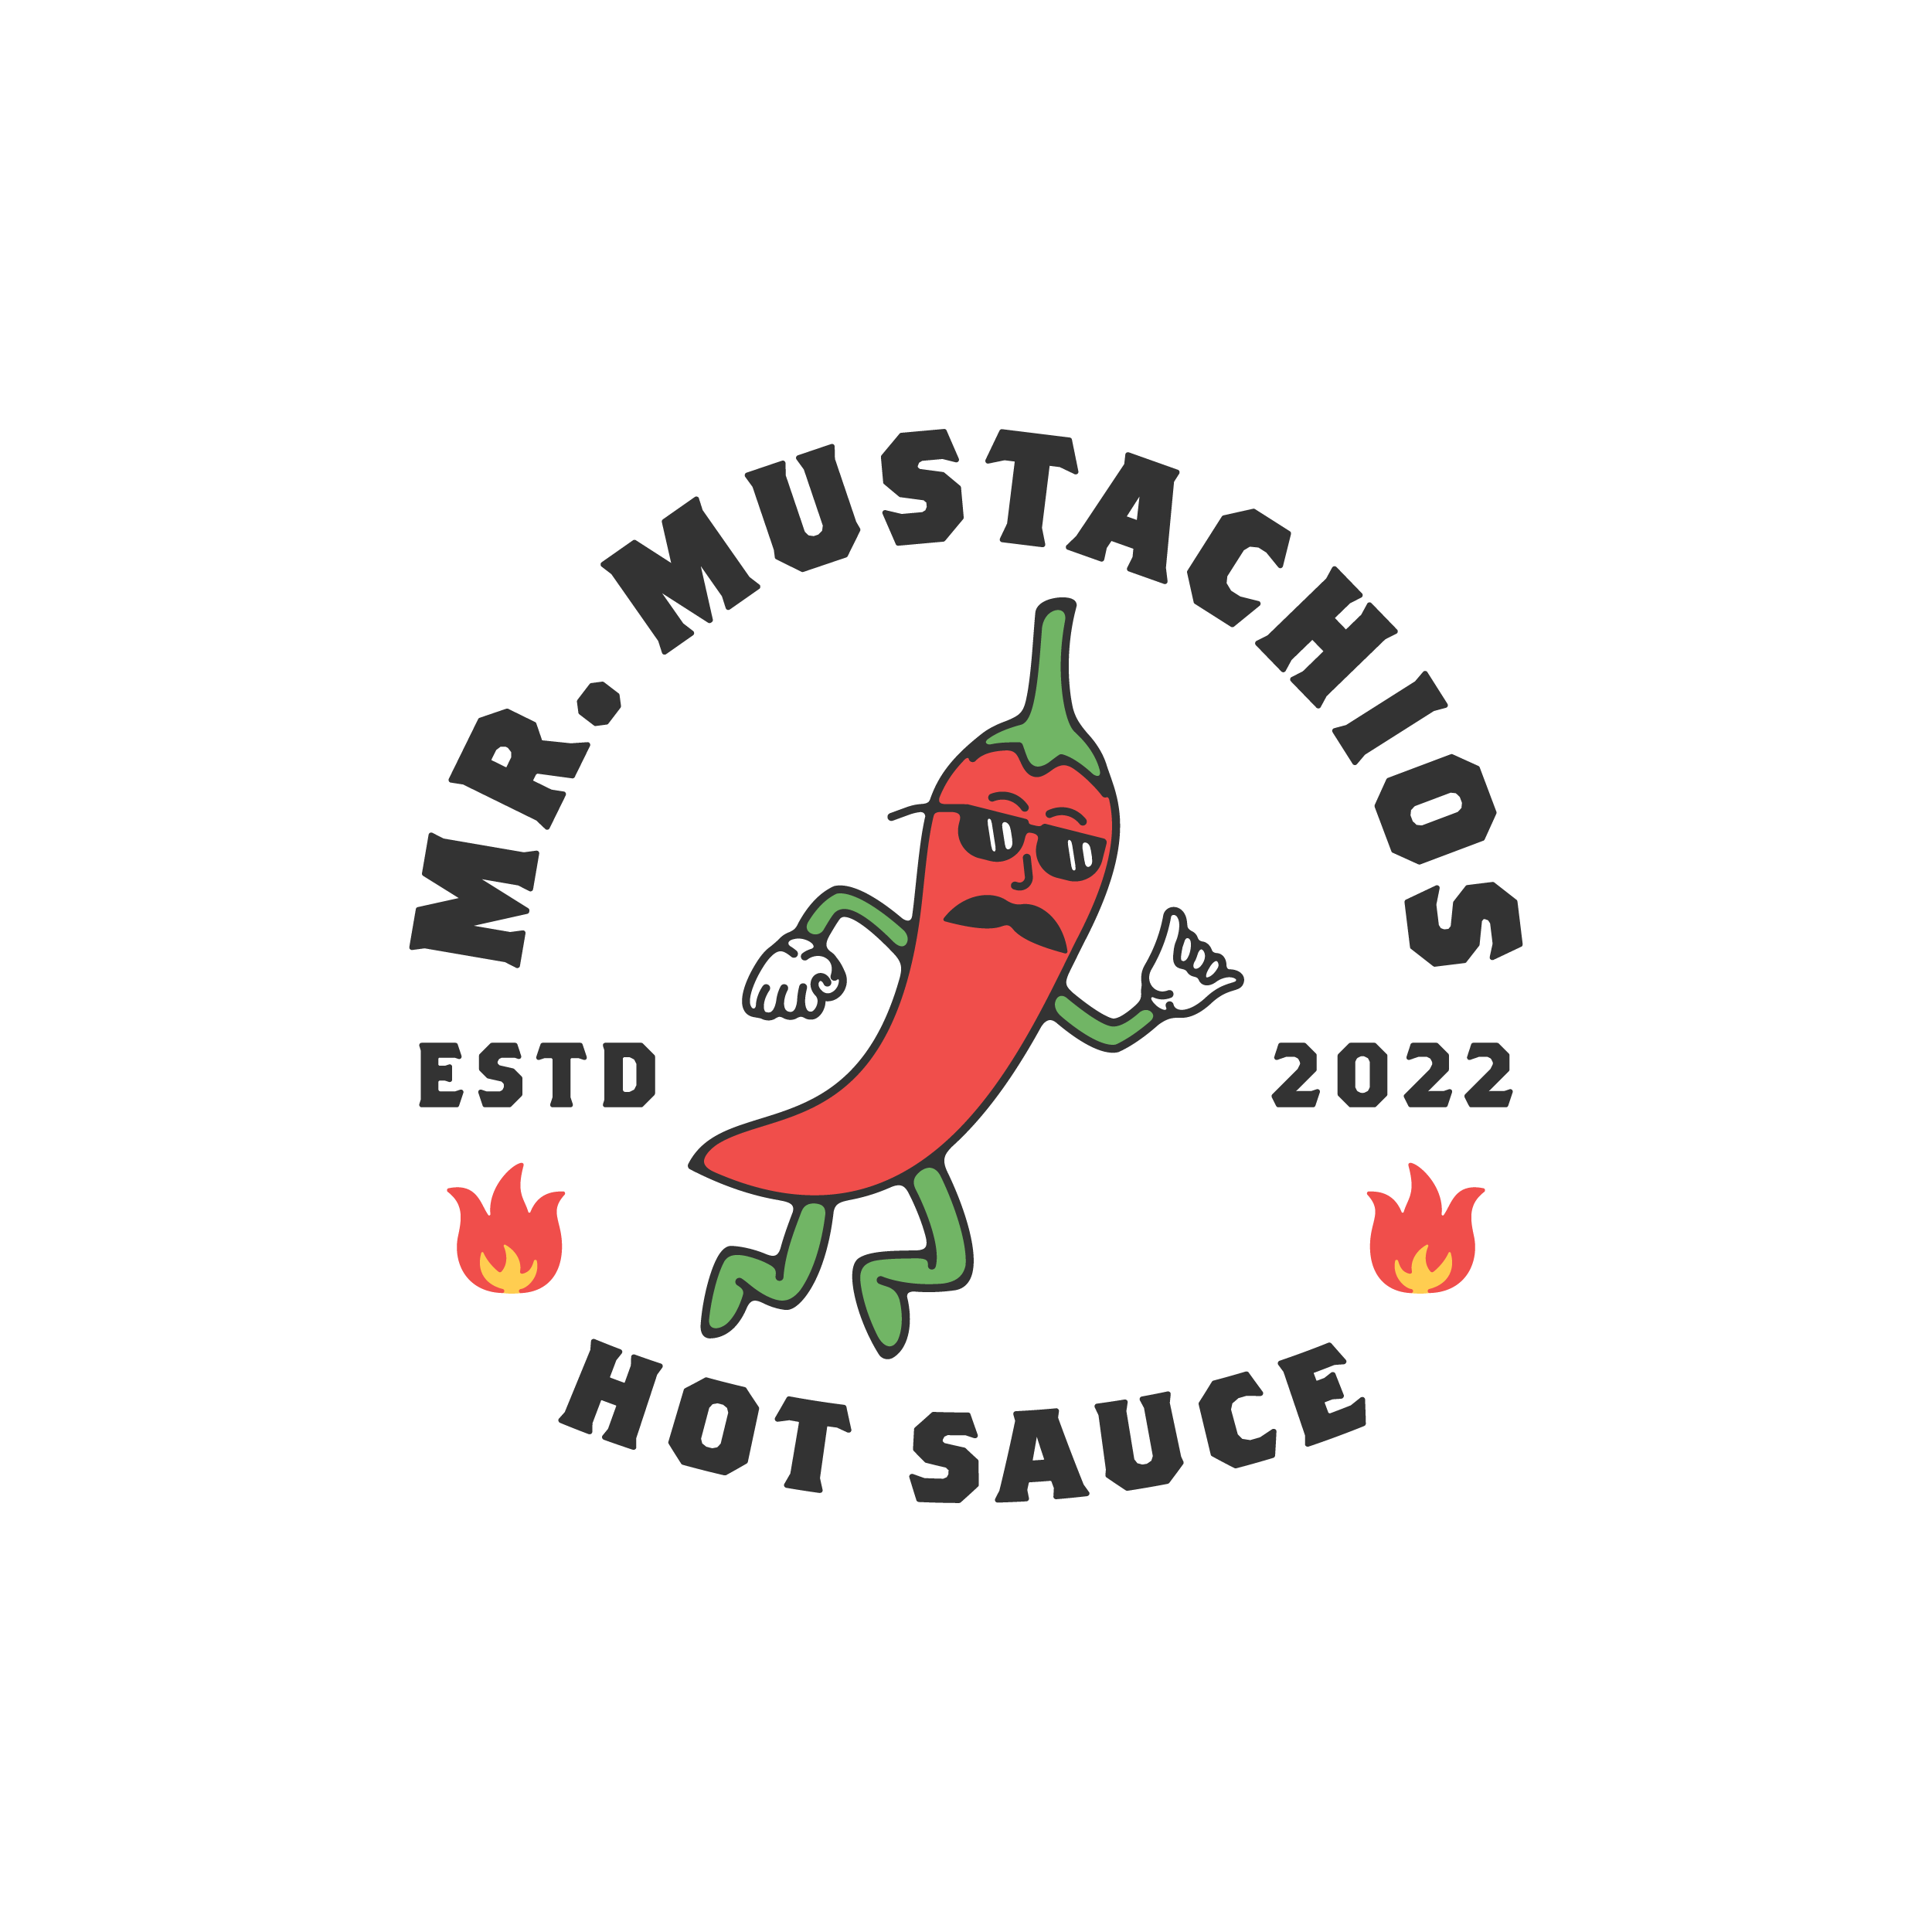 Mr. Mustachios Hot Sauce